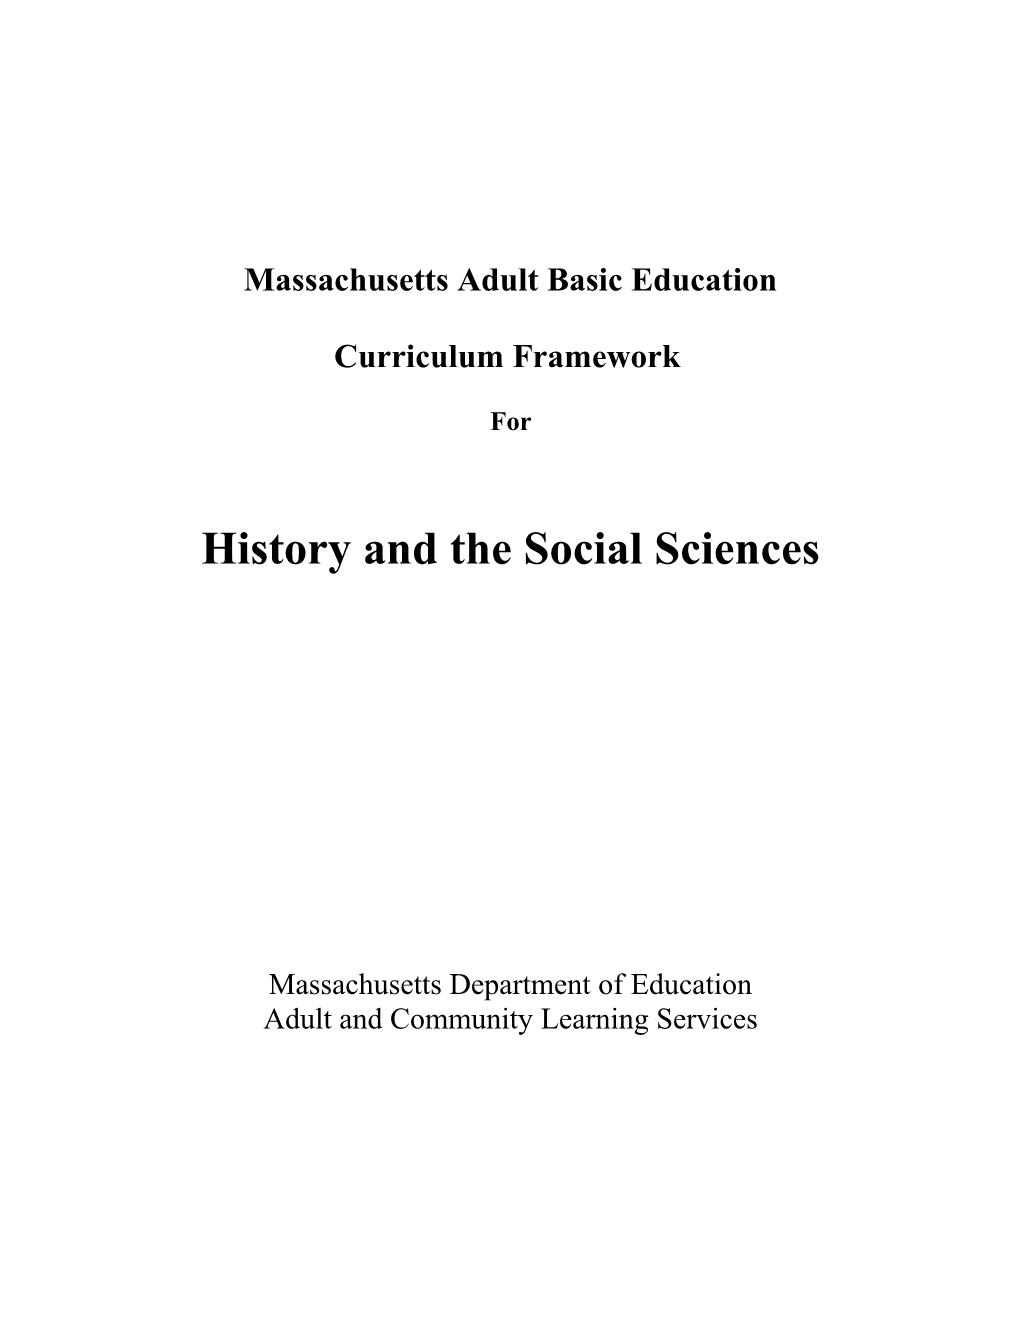 The ABE Curriculum Framework